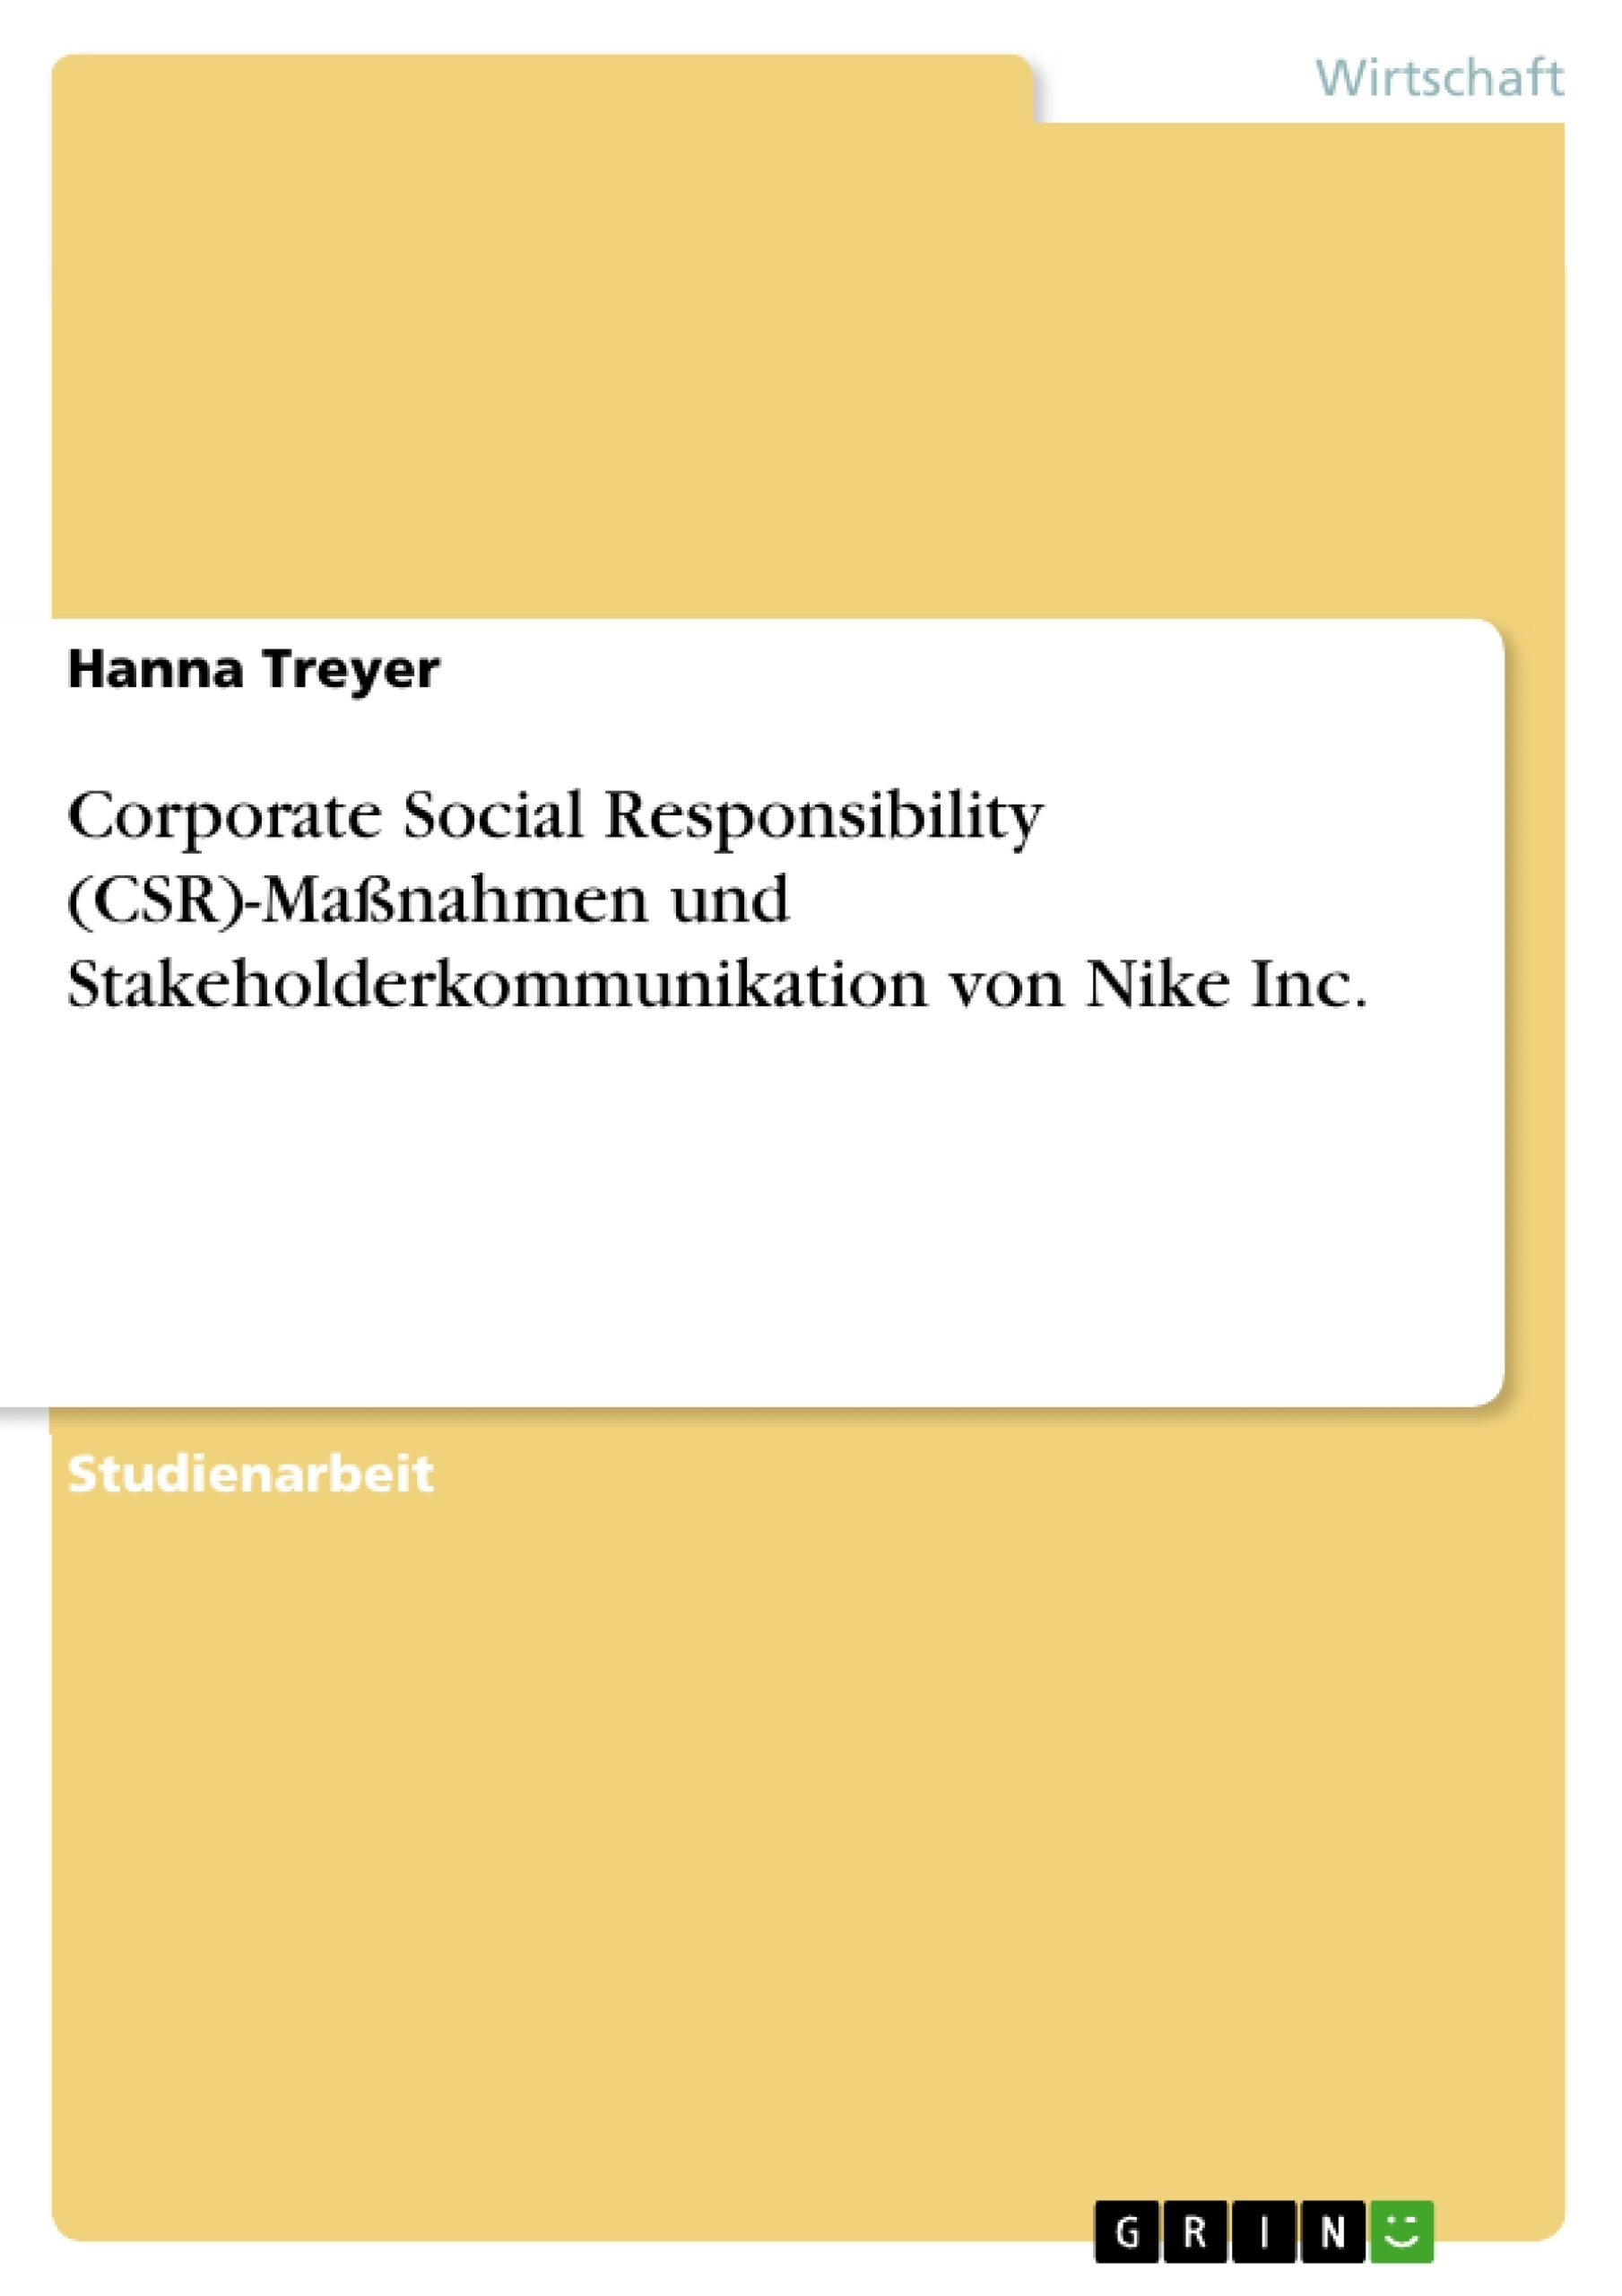 Titre: Corporate Social Responsibility (CSR)-Maßnahmen und Stakeholderkommunikation von Nike Inc.